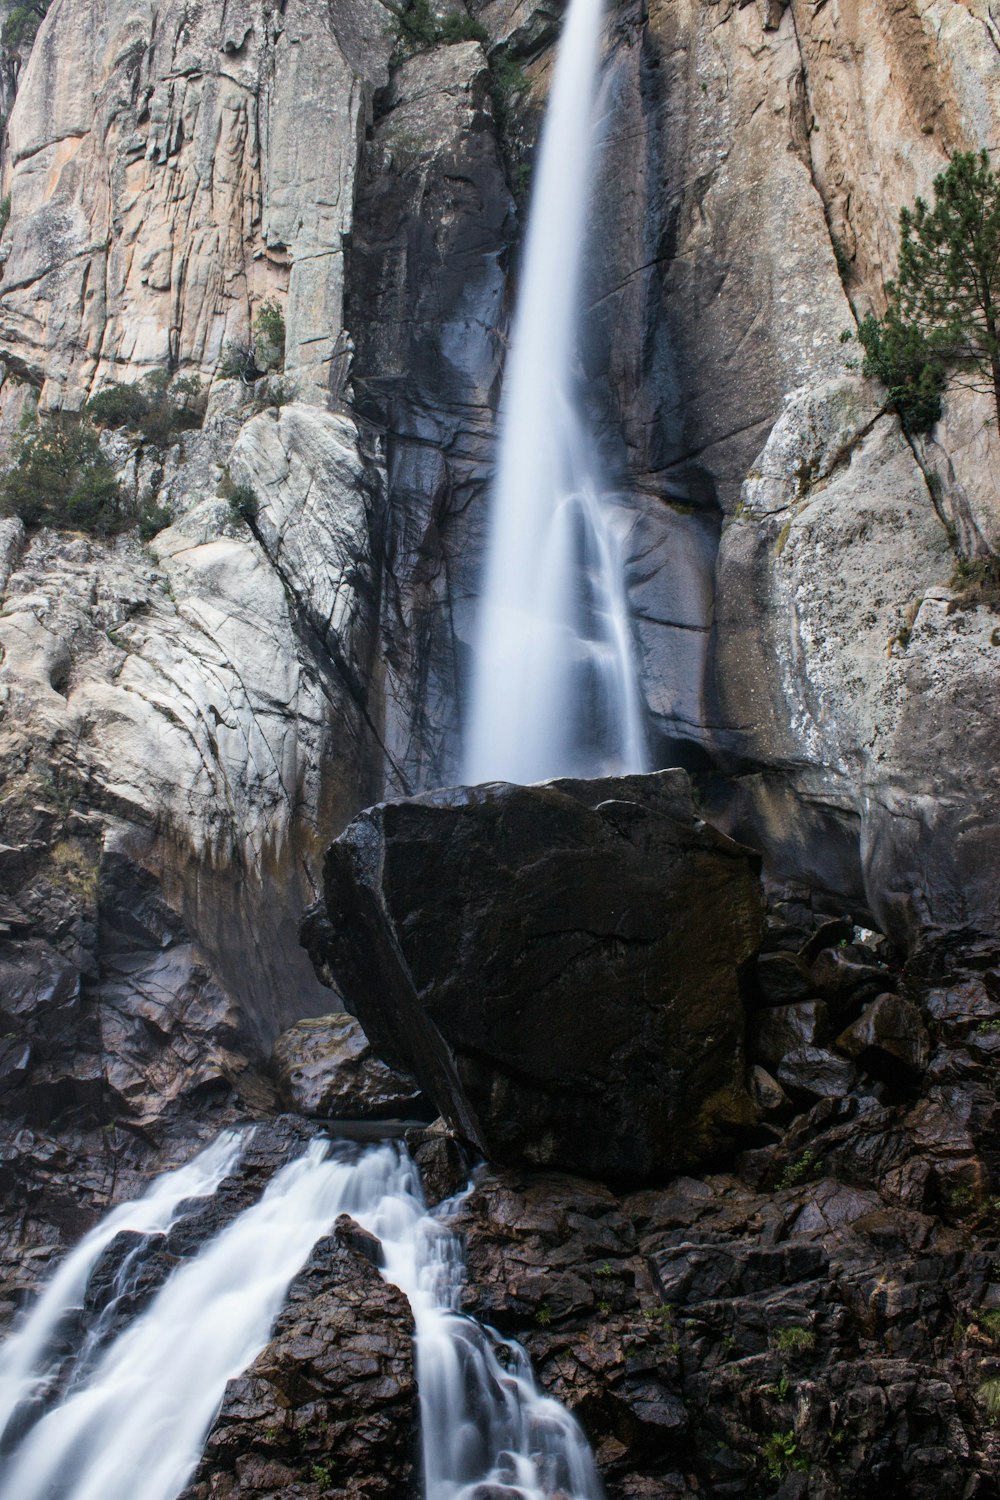 Daytmeの滝と茶色の岩層